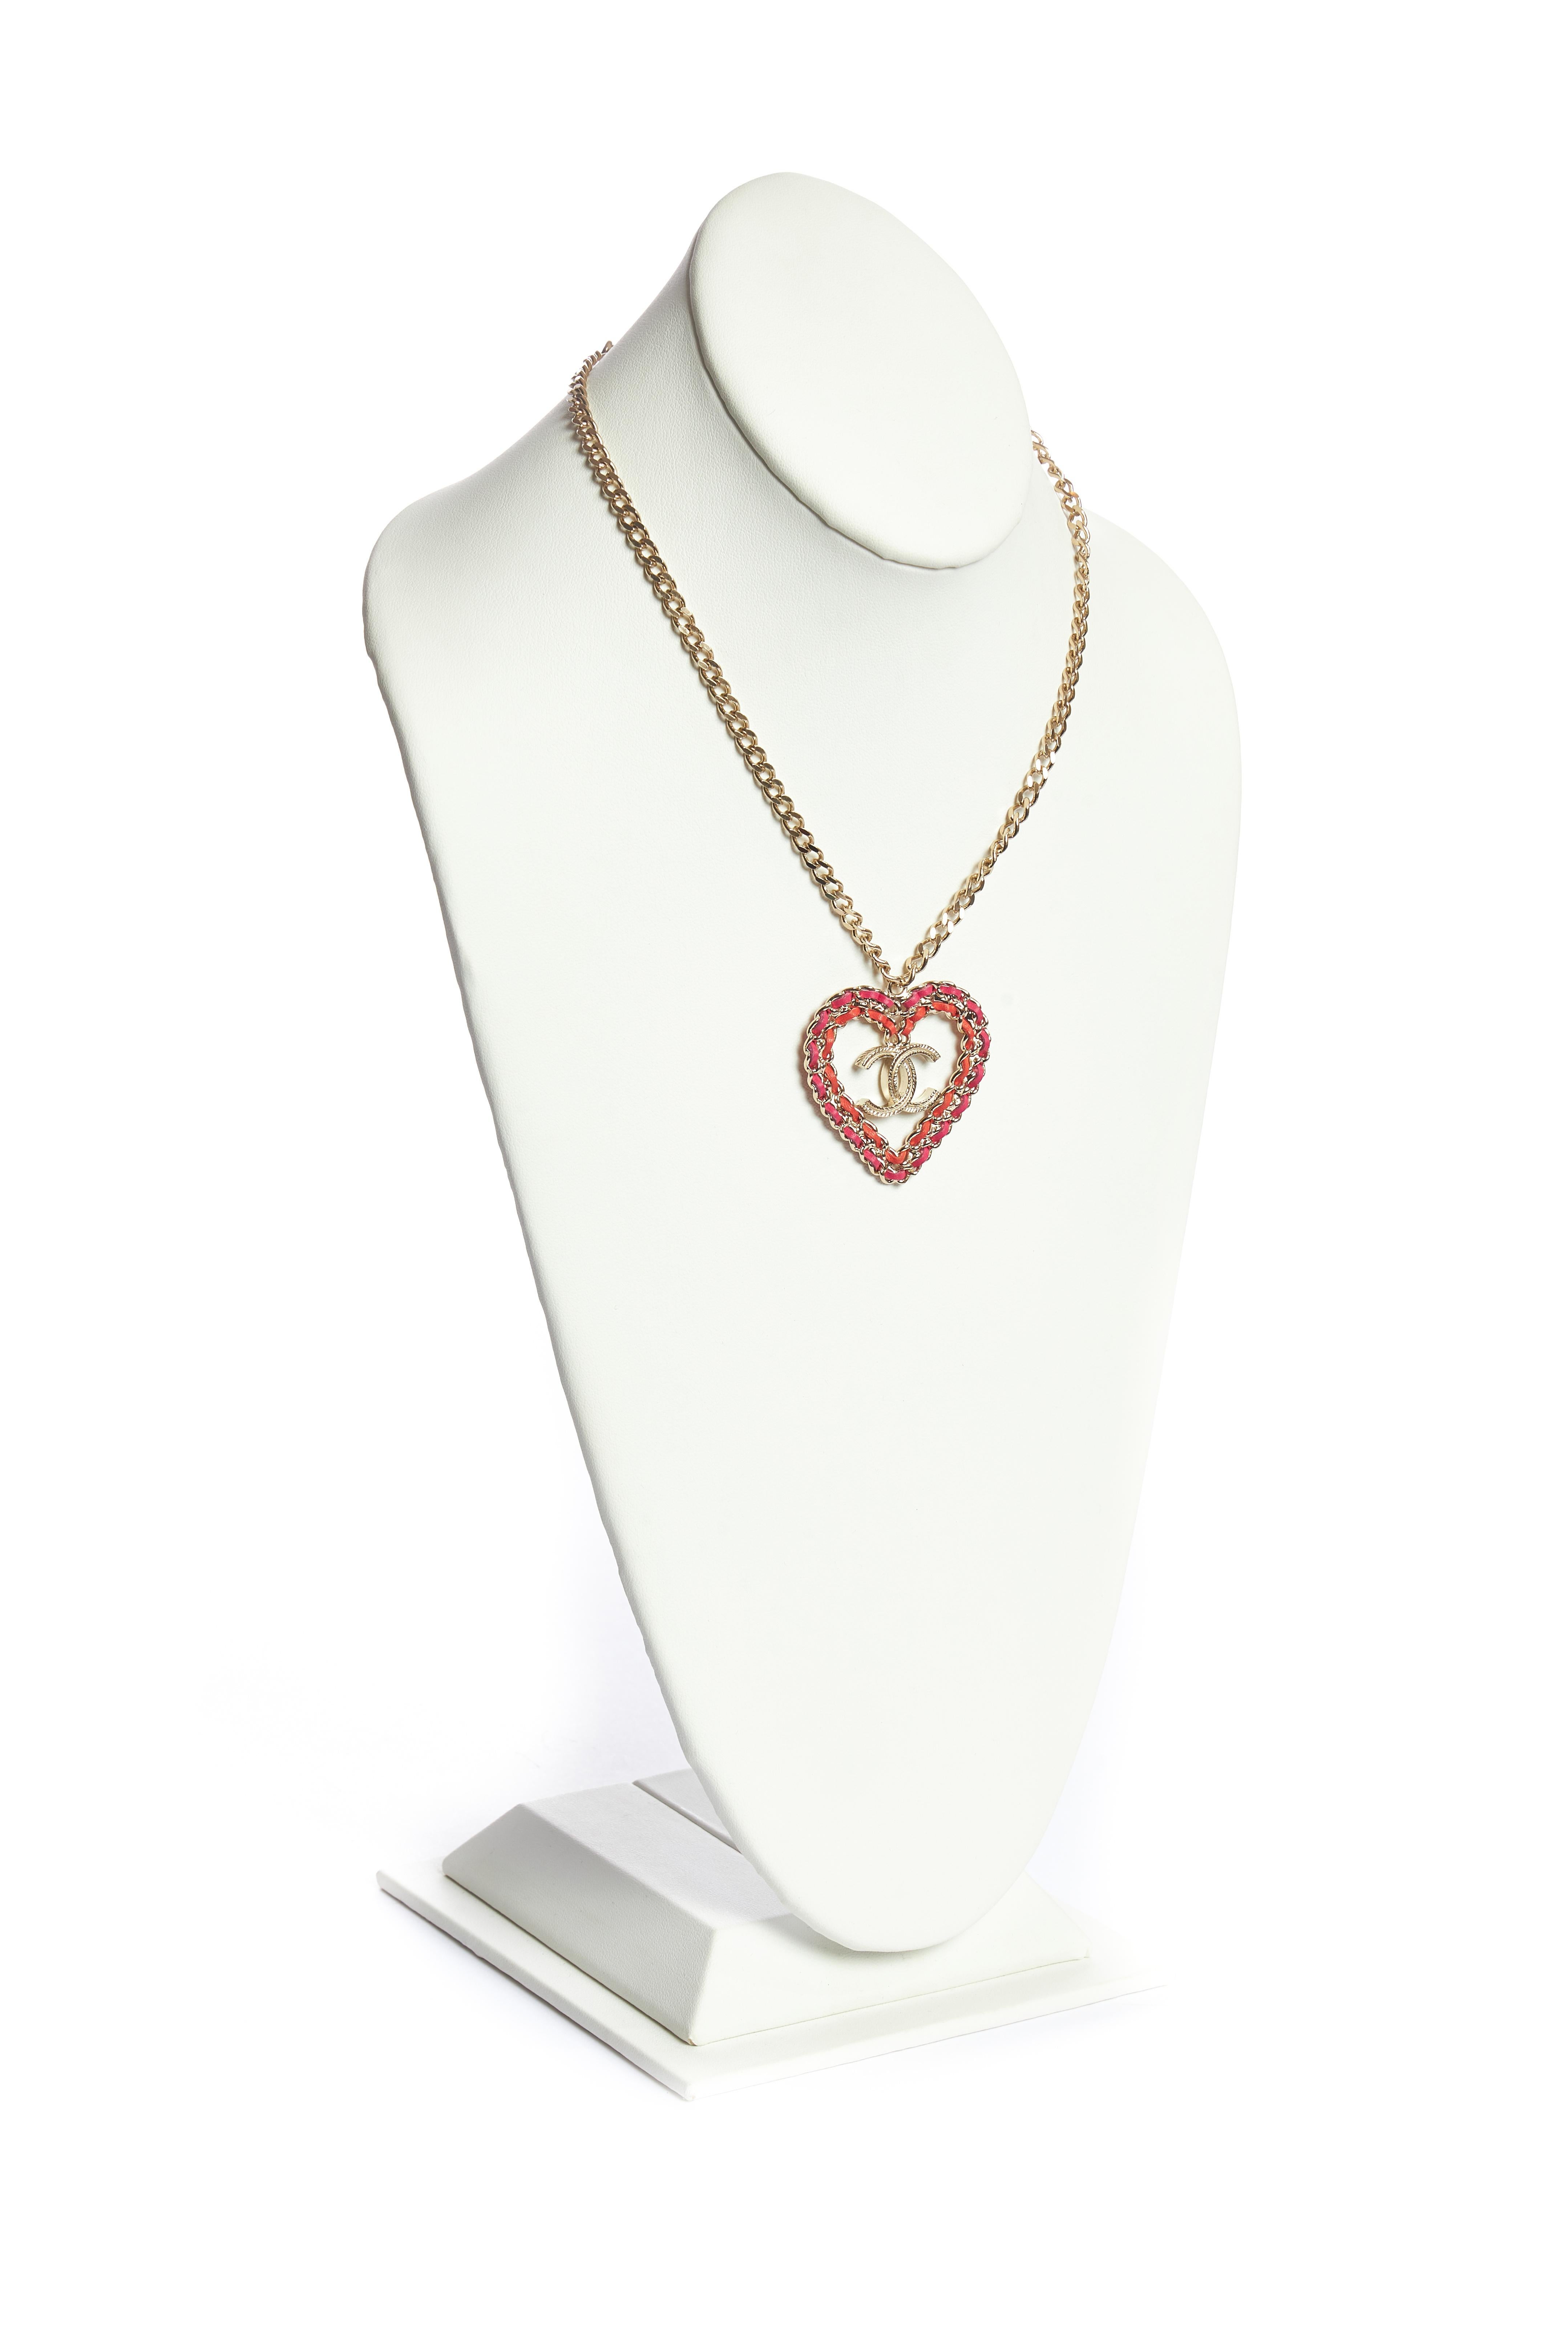 Chanel silver tone heart pendant necklace. Pendant: Length 1.75